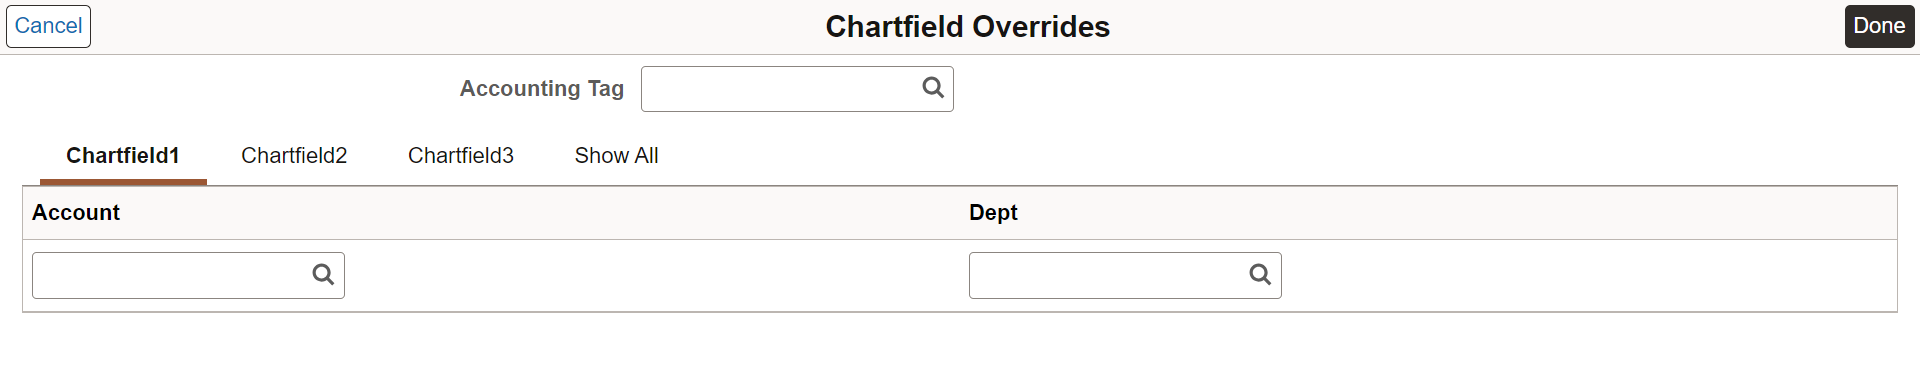 Express Issue - Chartfield Overrides Chartfields1 tab